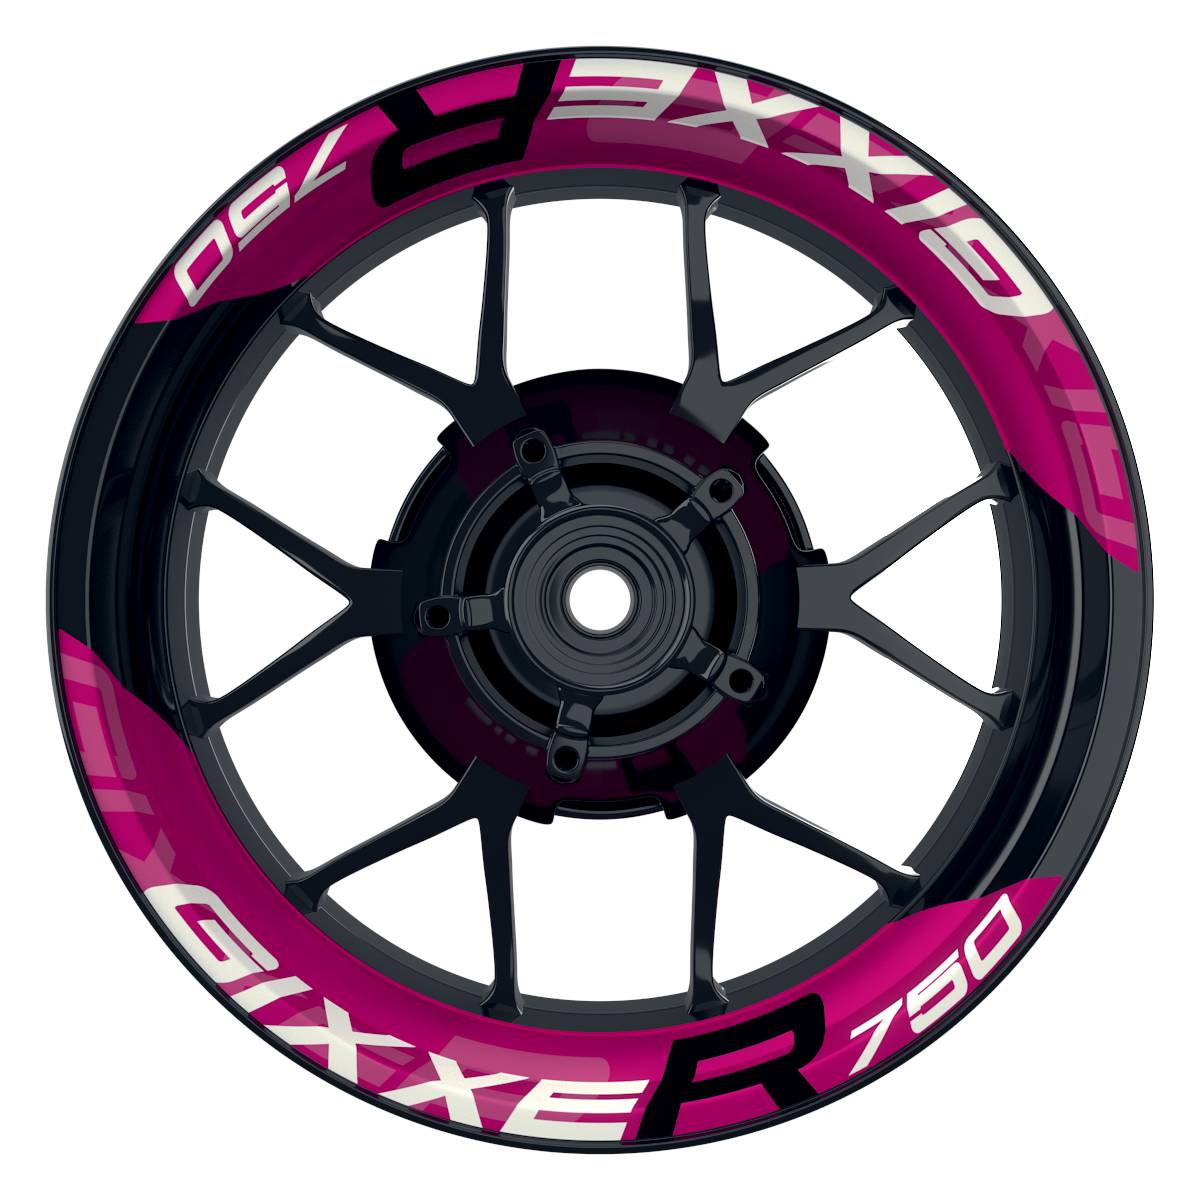 Wheelsticker Felgenaufkleber GIXXER750 einfarbig V2 pink Frontansicht